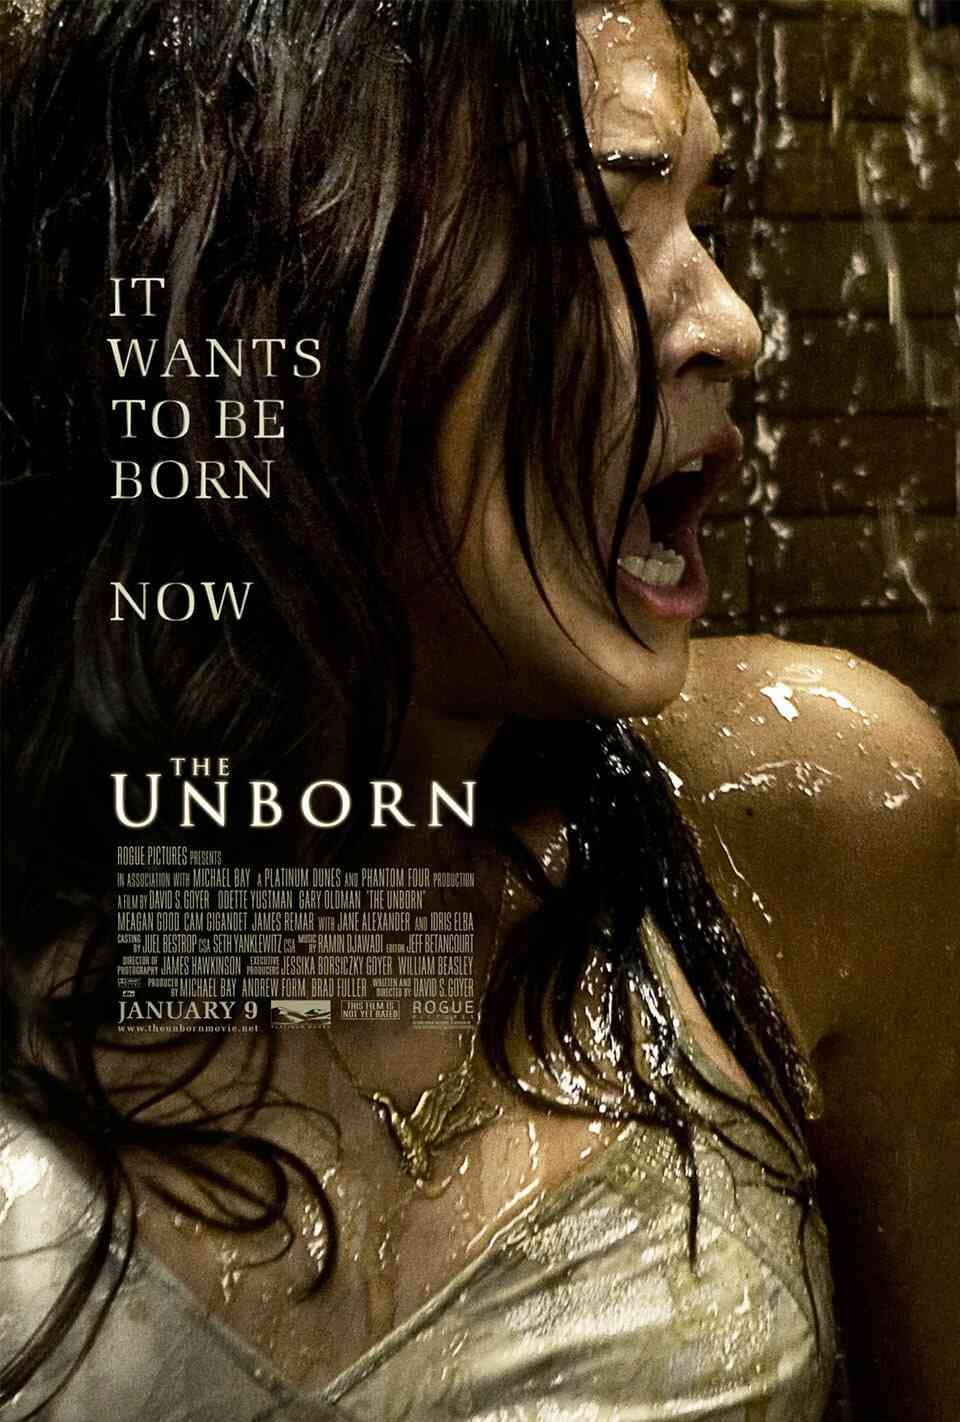 Read The Unborn screenplay.